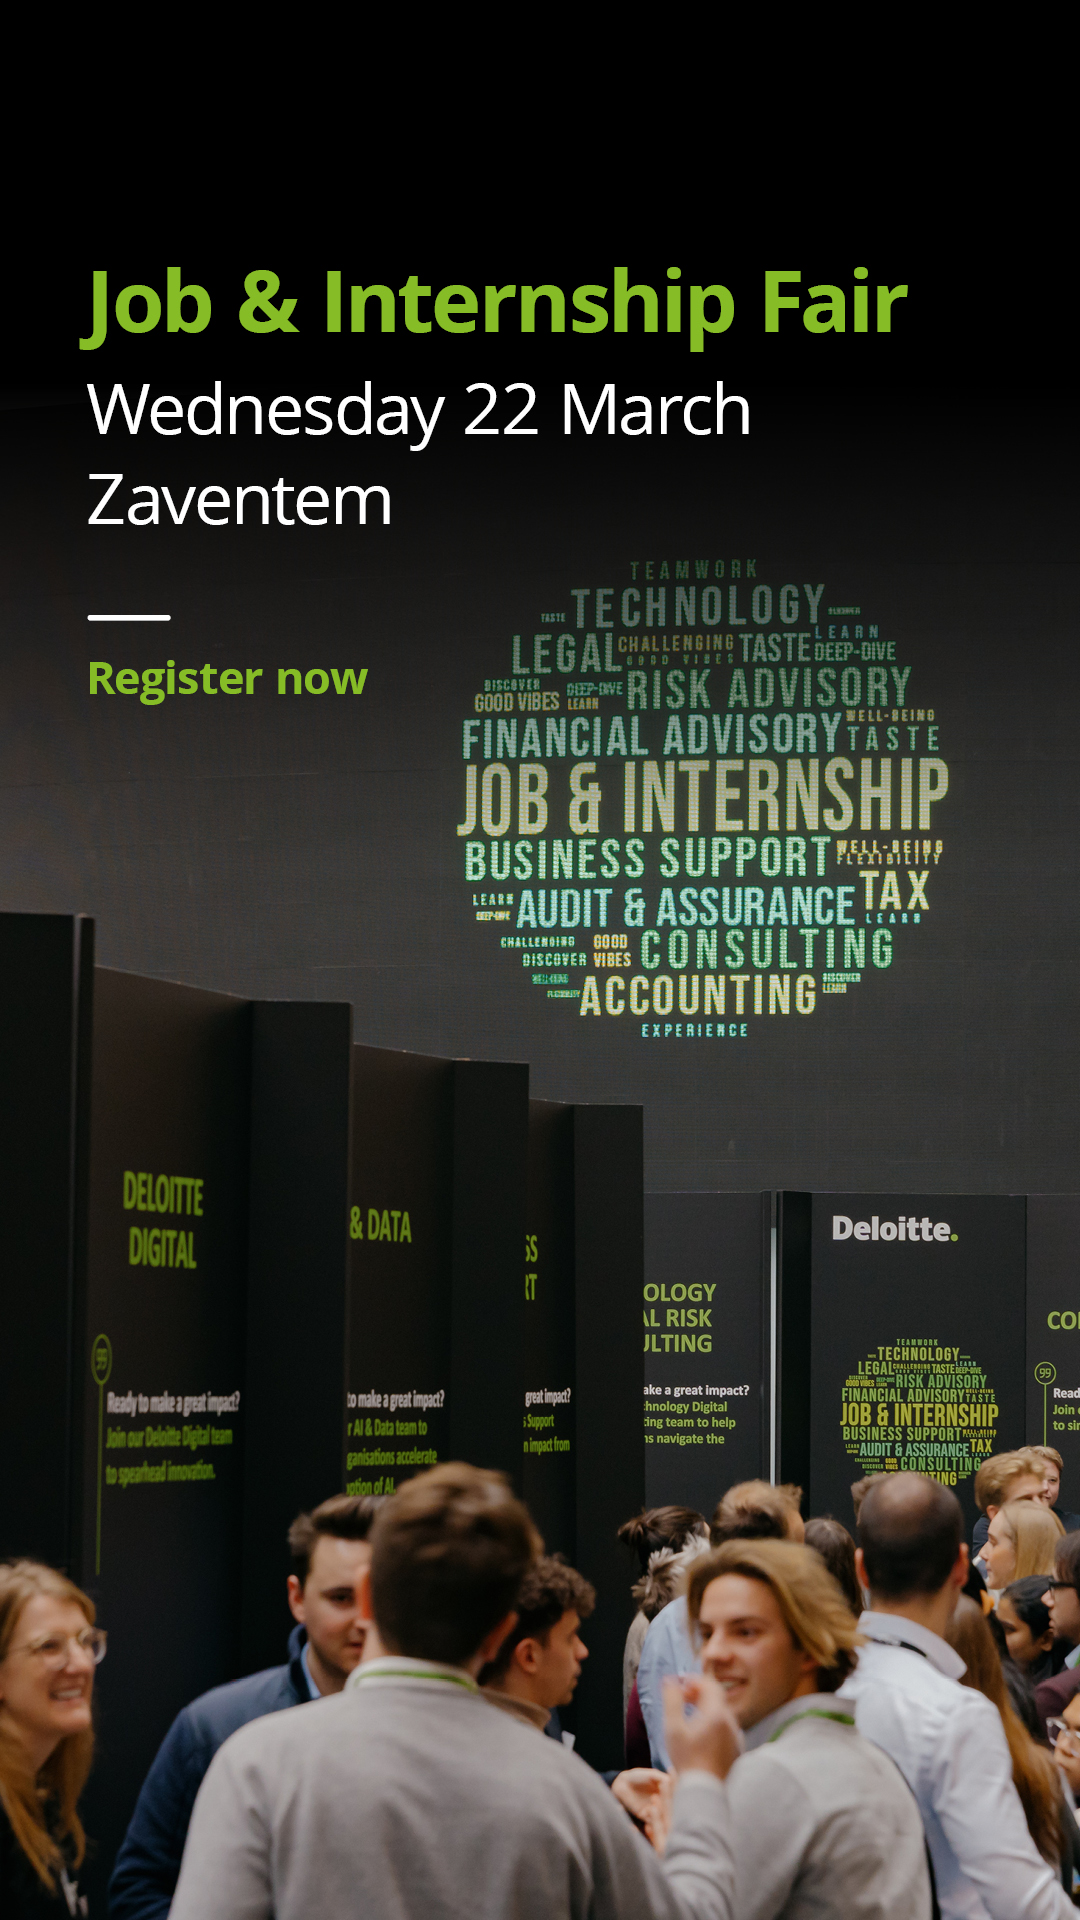 Deloitte: Job & Internship Fair